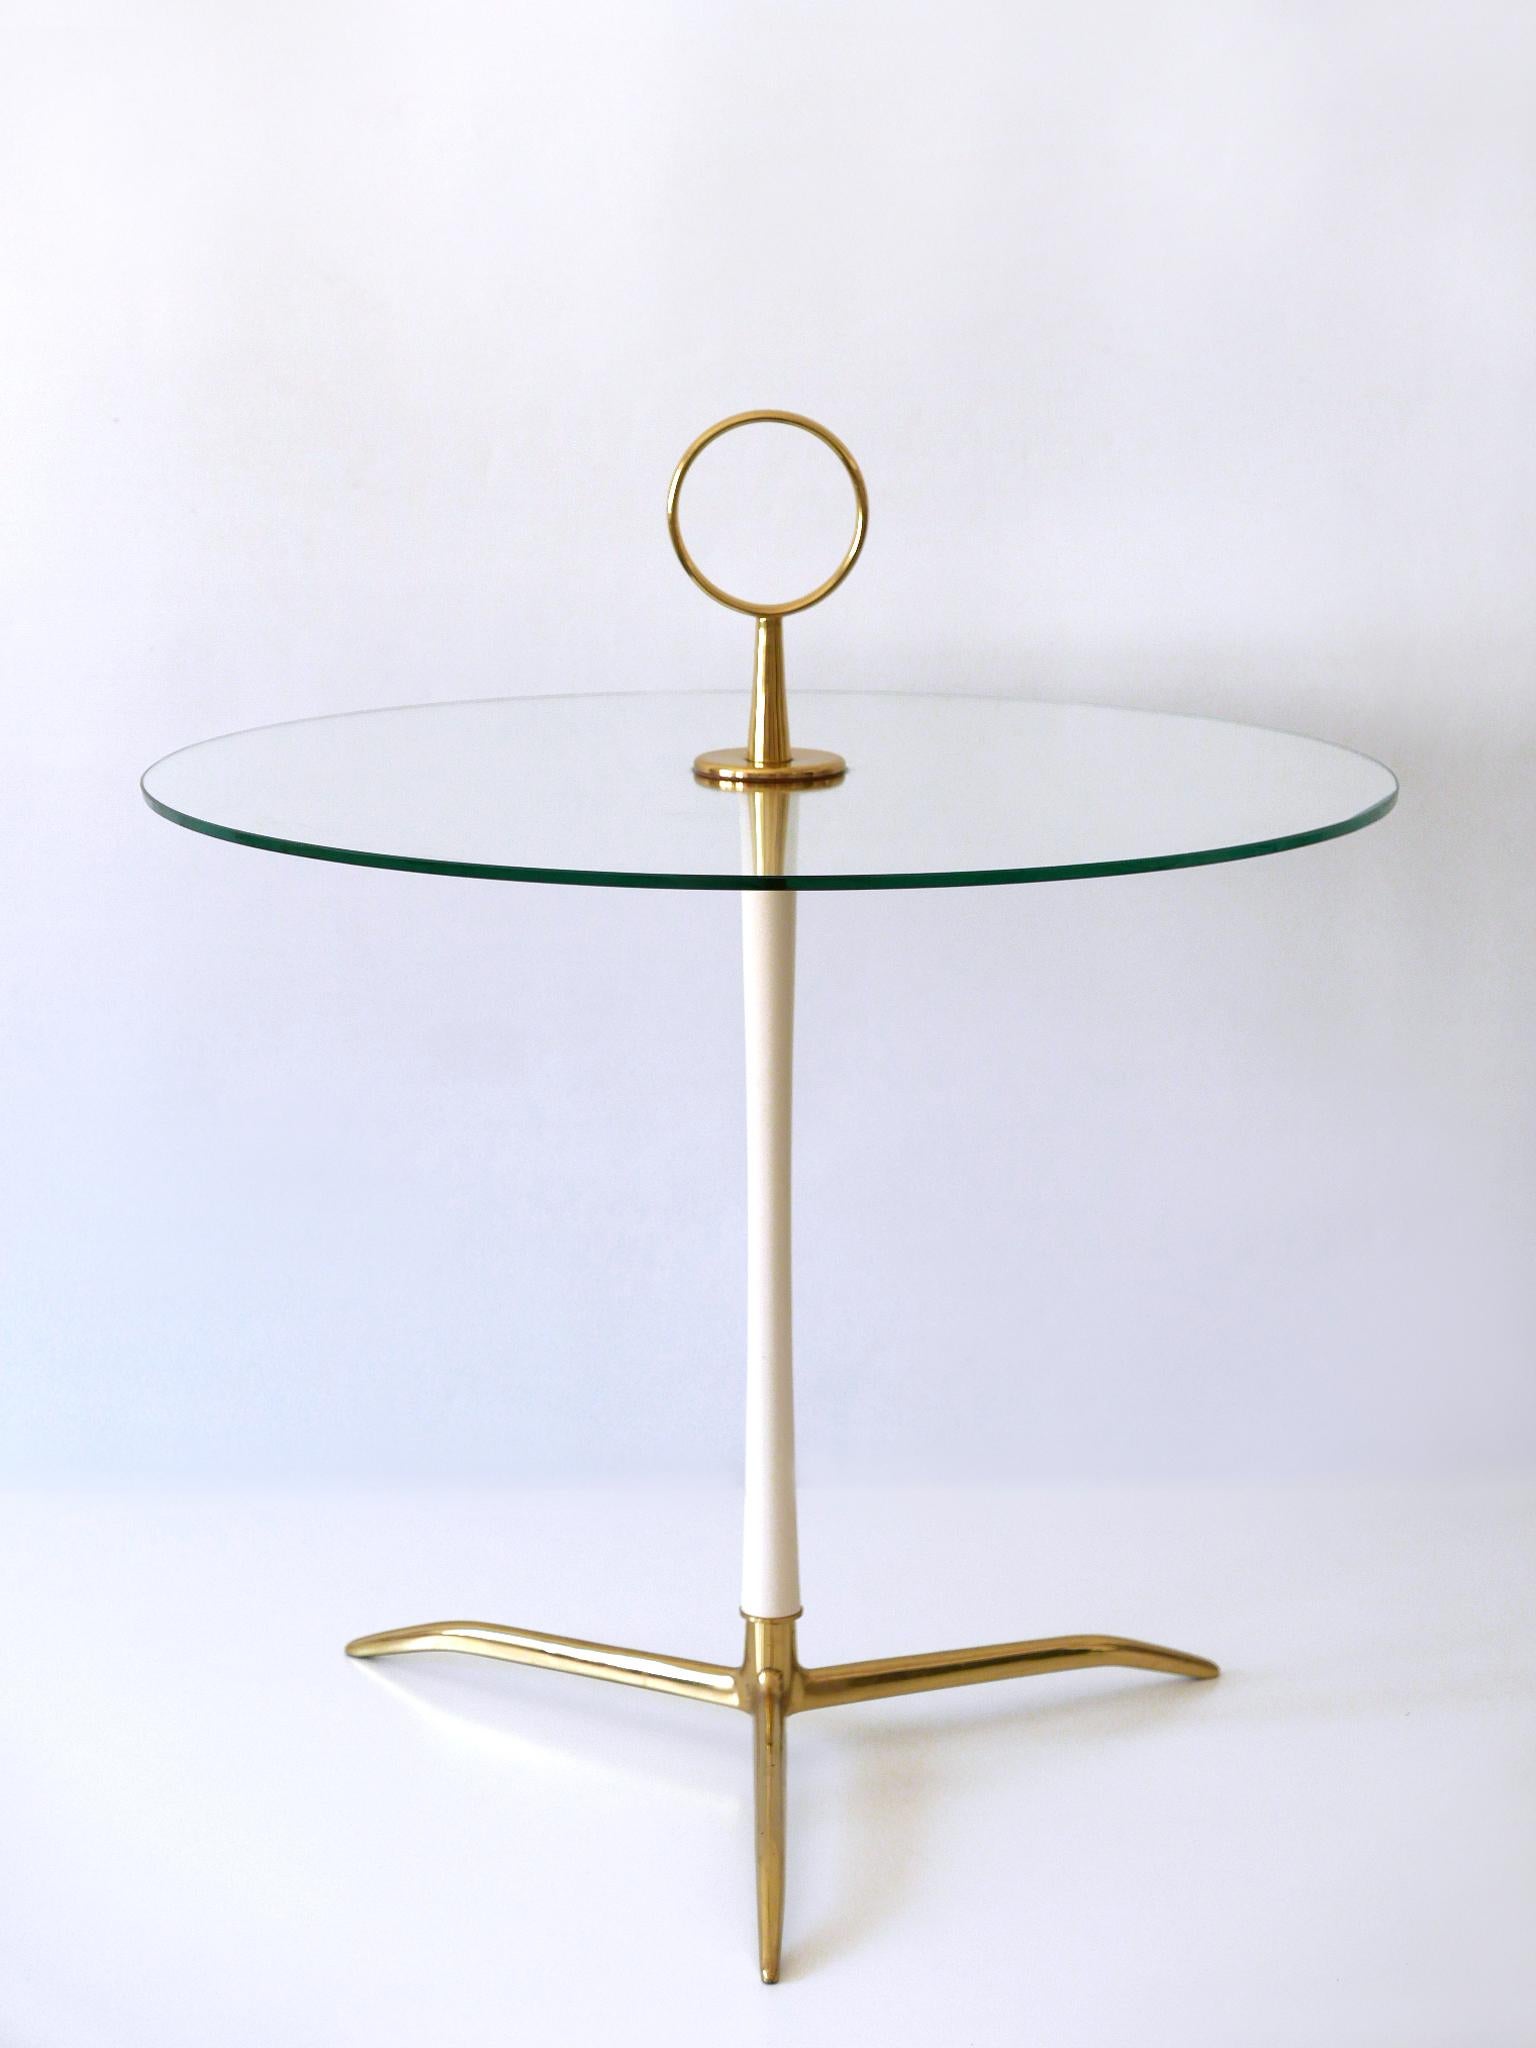 Elegant Mid-Century Modern Side Table by Vereinigte Werkstätten Germany 1950s For Sale 4